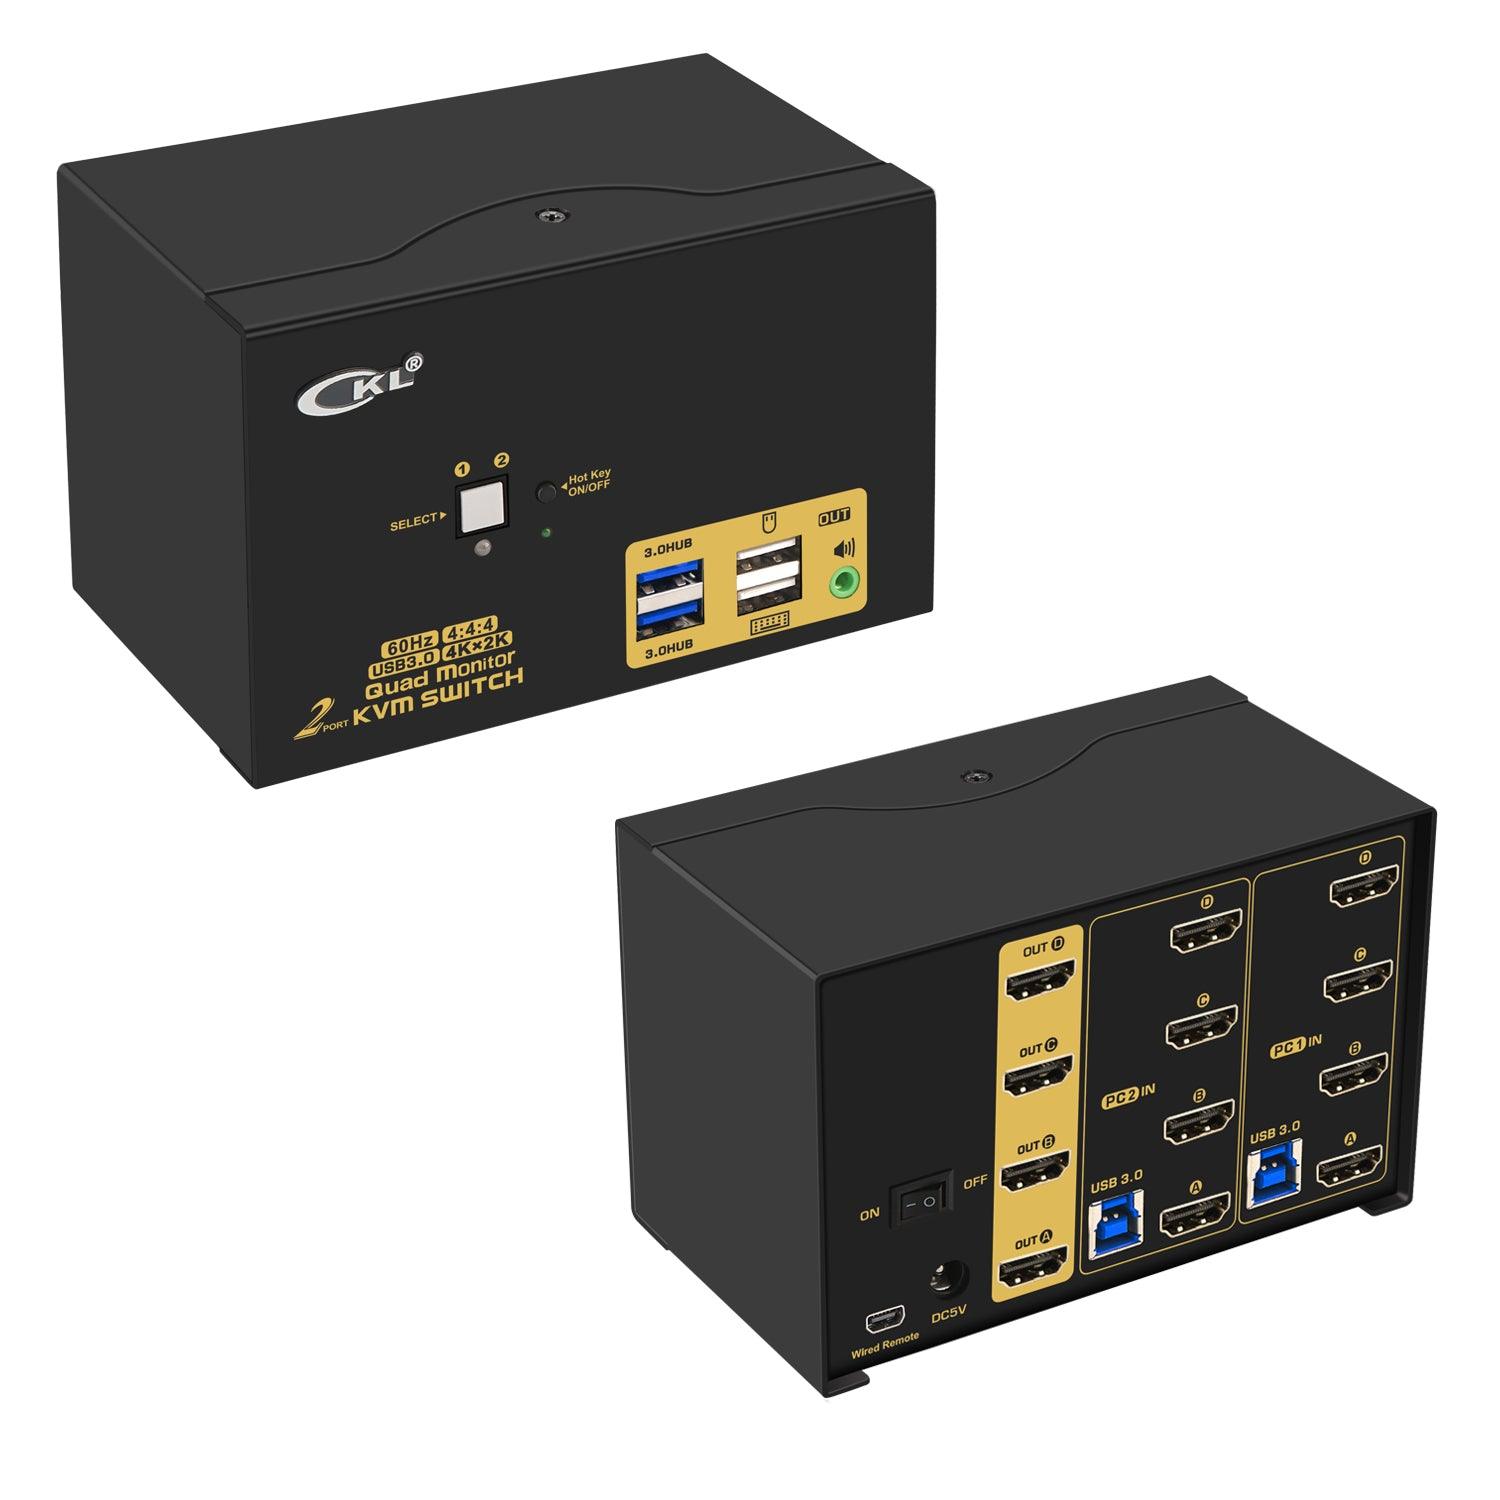 CKL 2 Port USB 3.0 KVM Switch 4 Monitors HDMI 4K 60Hz, Keyboard Video Mouse Peripherals Switcher for 2 Computers 4 Monitors with Audio CKL-924HUA-3 - CKL KVM Switches